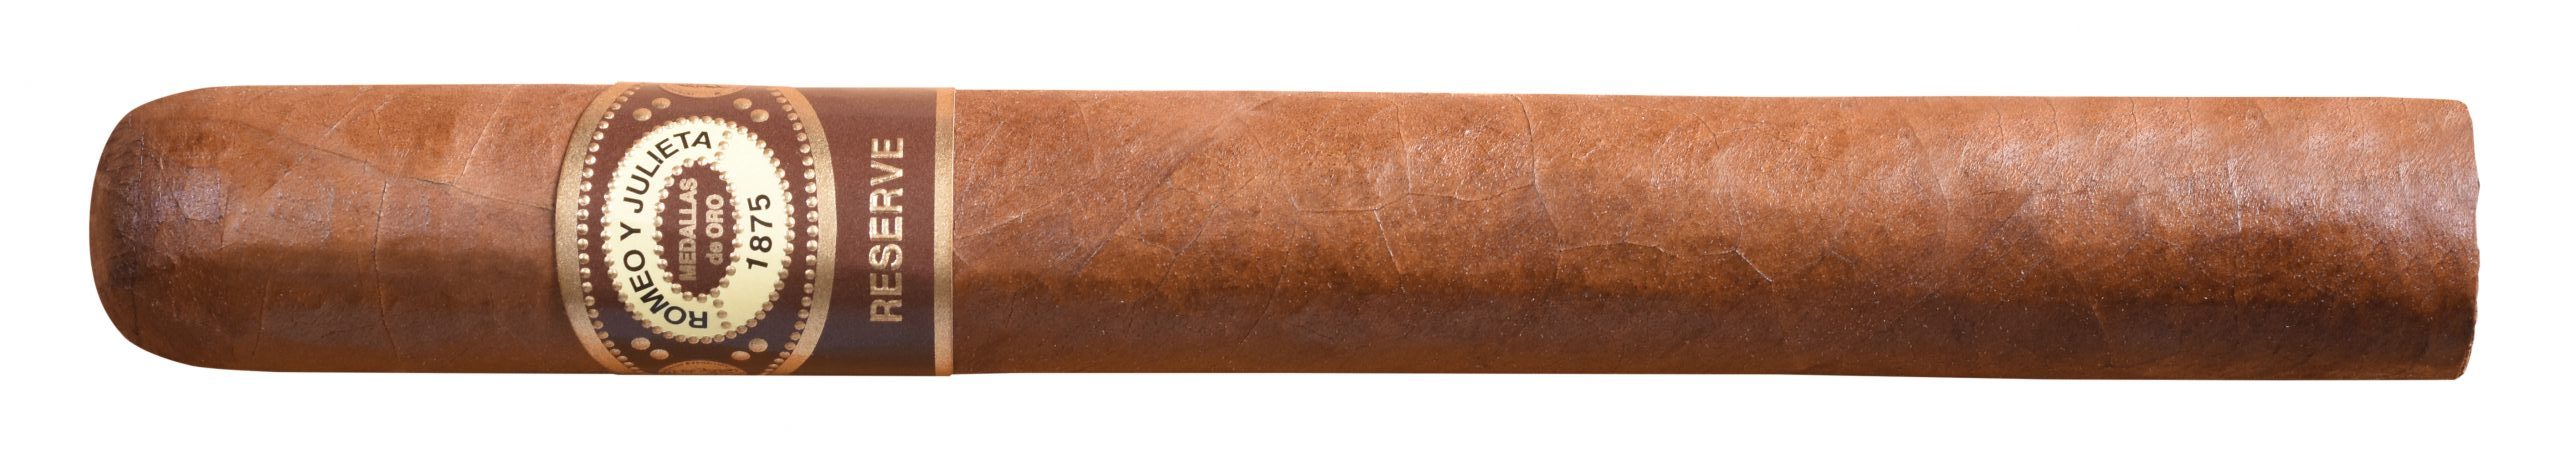 romeo y julieta reserve robusto single cigar